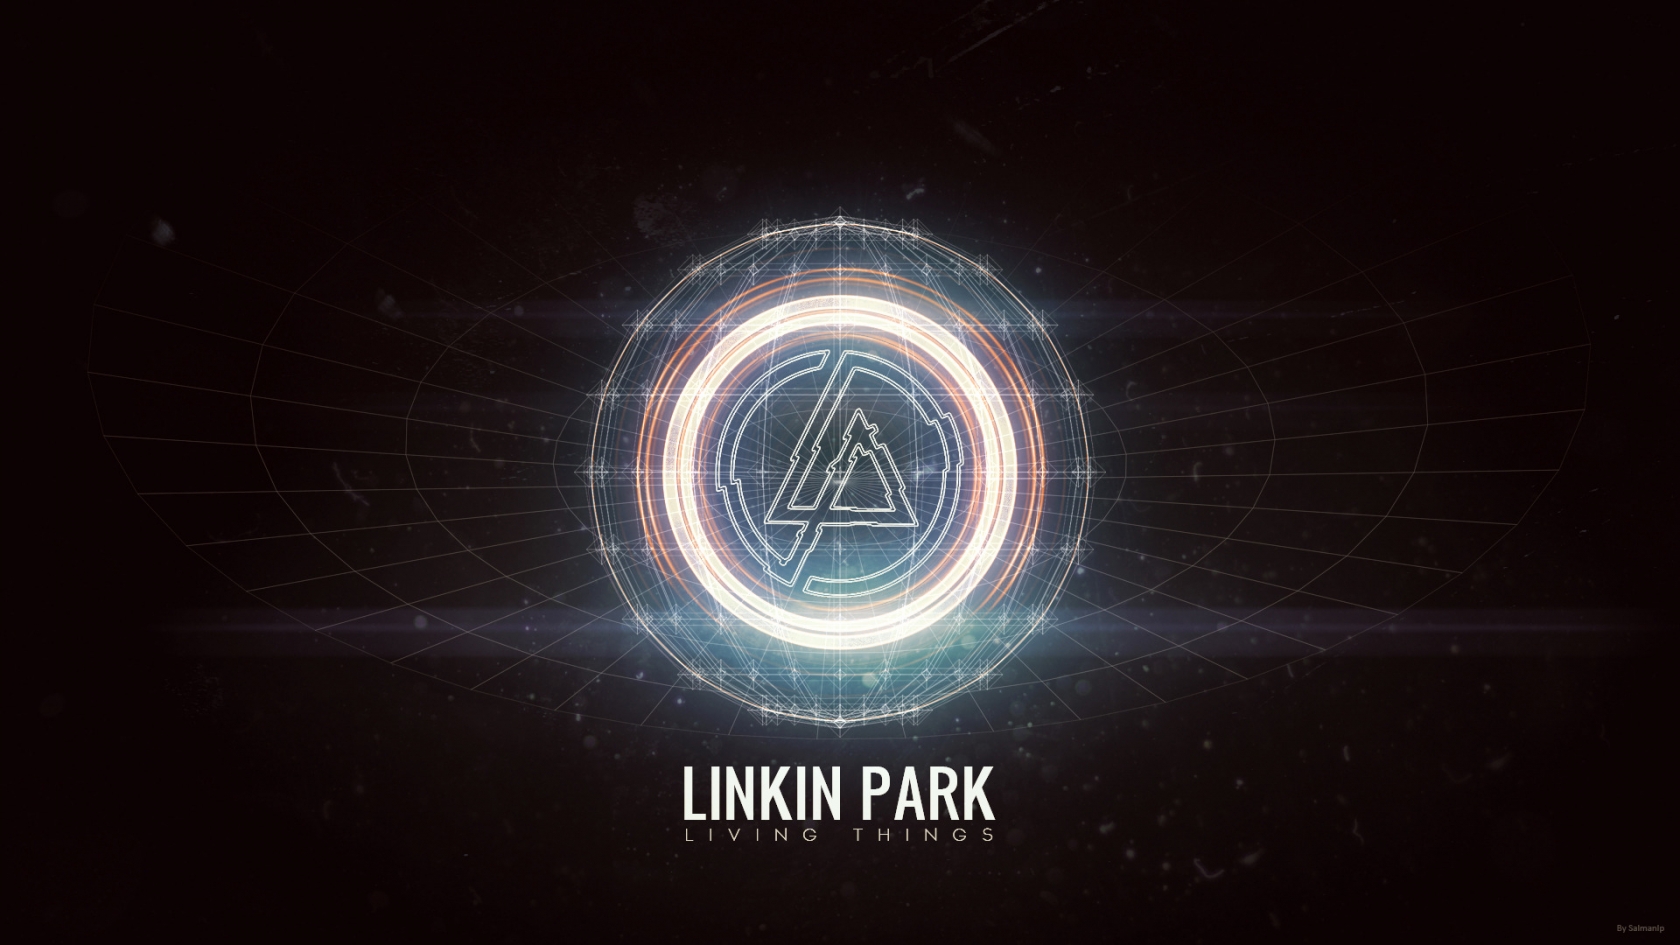 Linkin Park Living Things for 1680 x 945 HDTV resolution